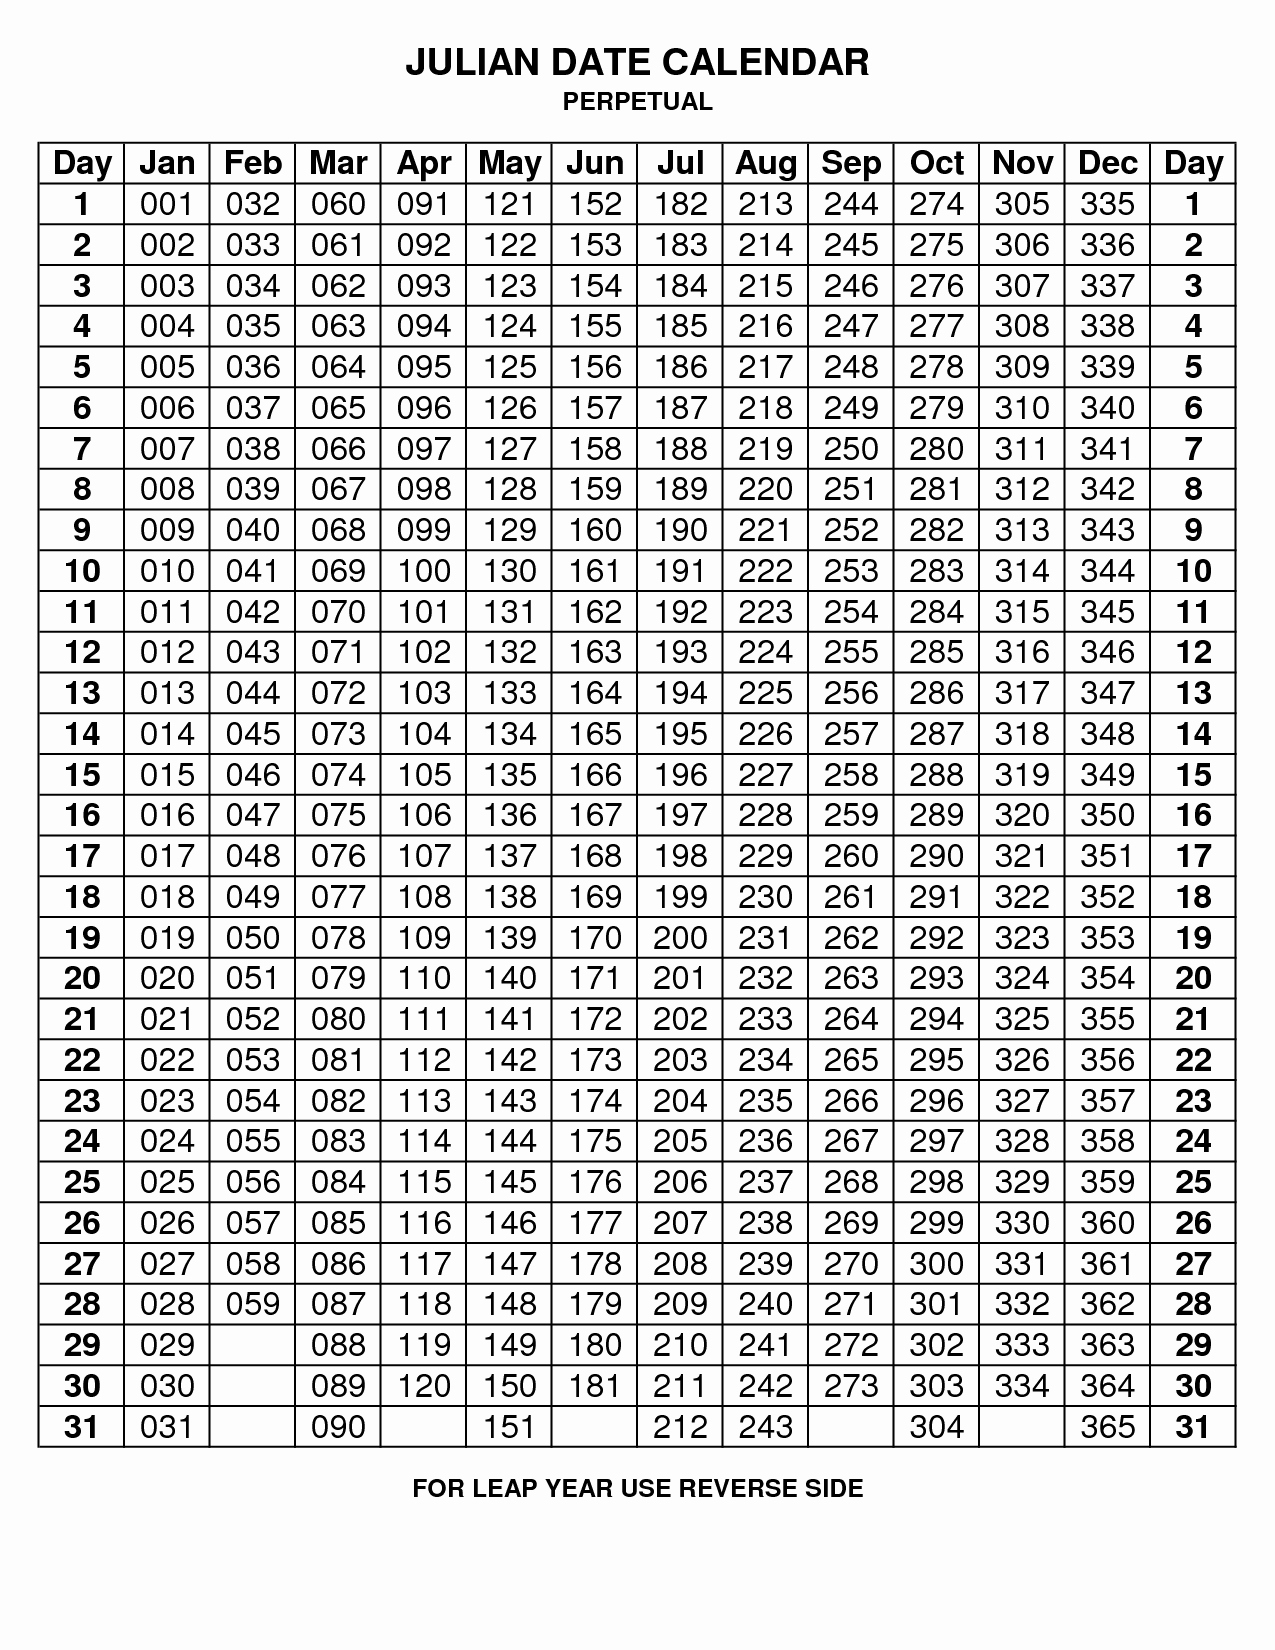 Depo Provera Perpetual Calendar To Print - Calendar Depo Shot Calendar 2021